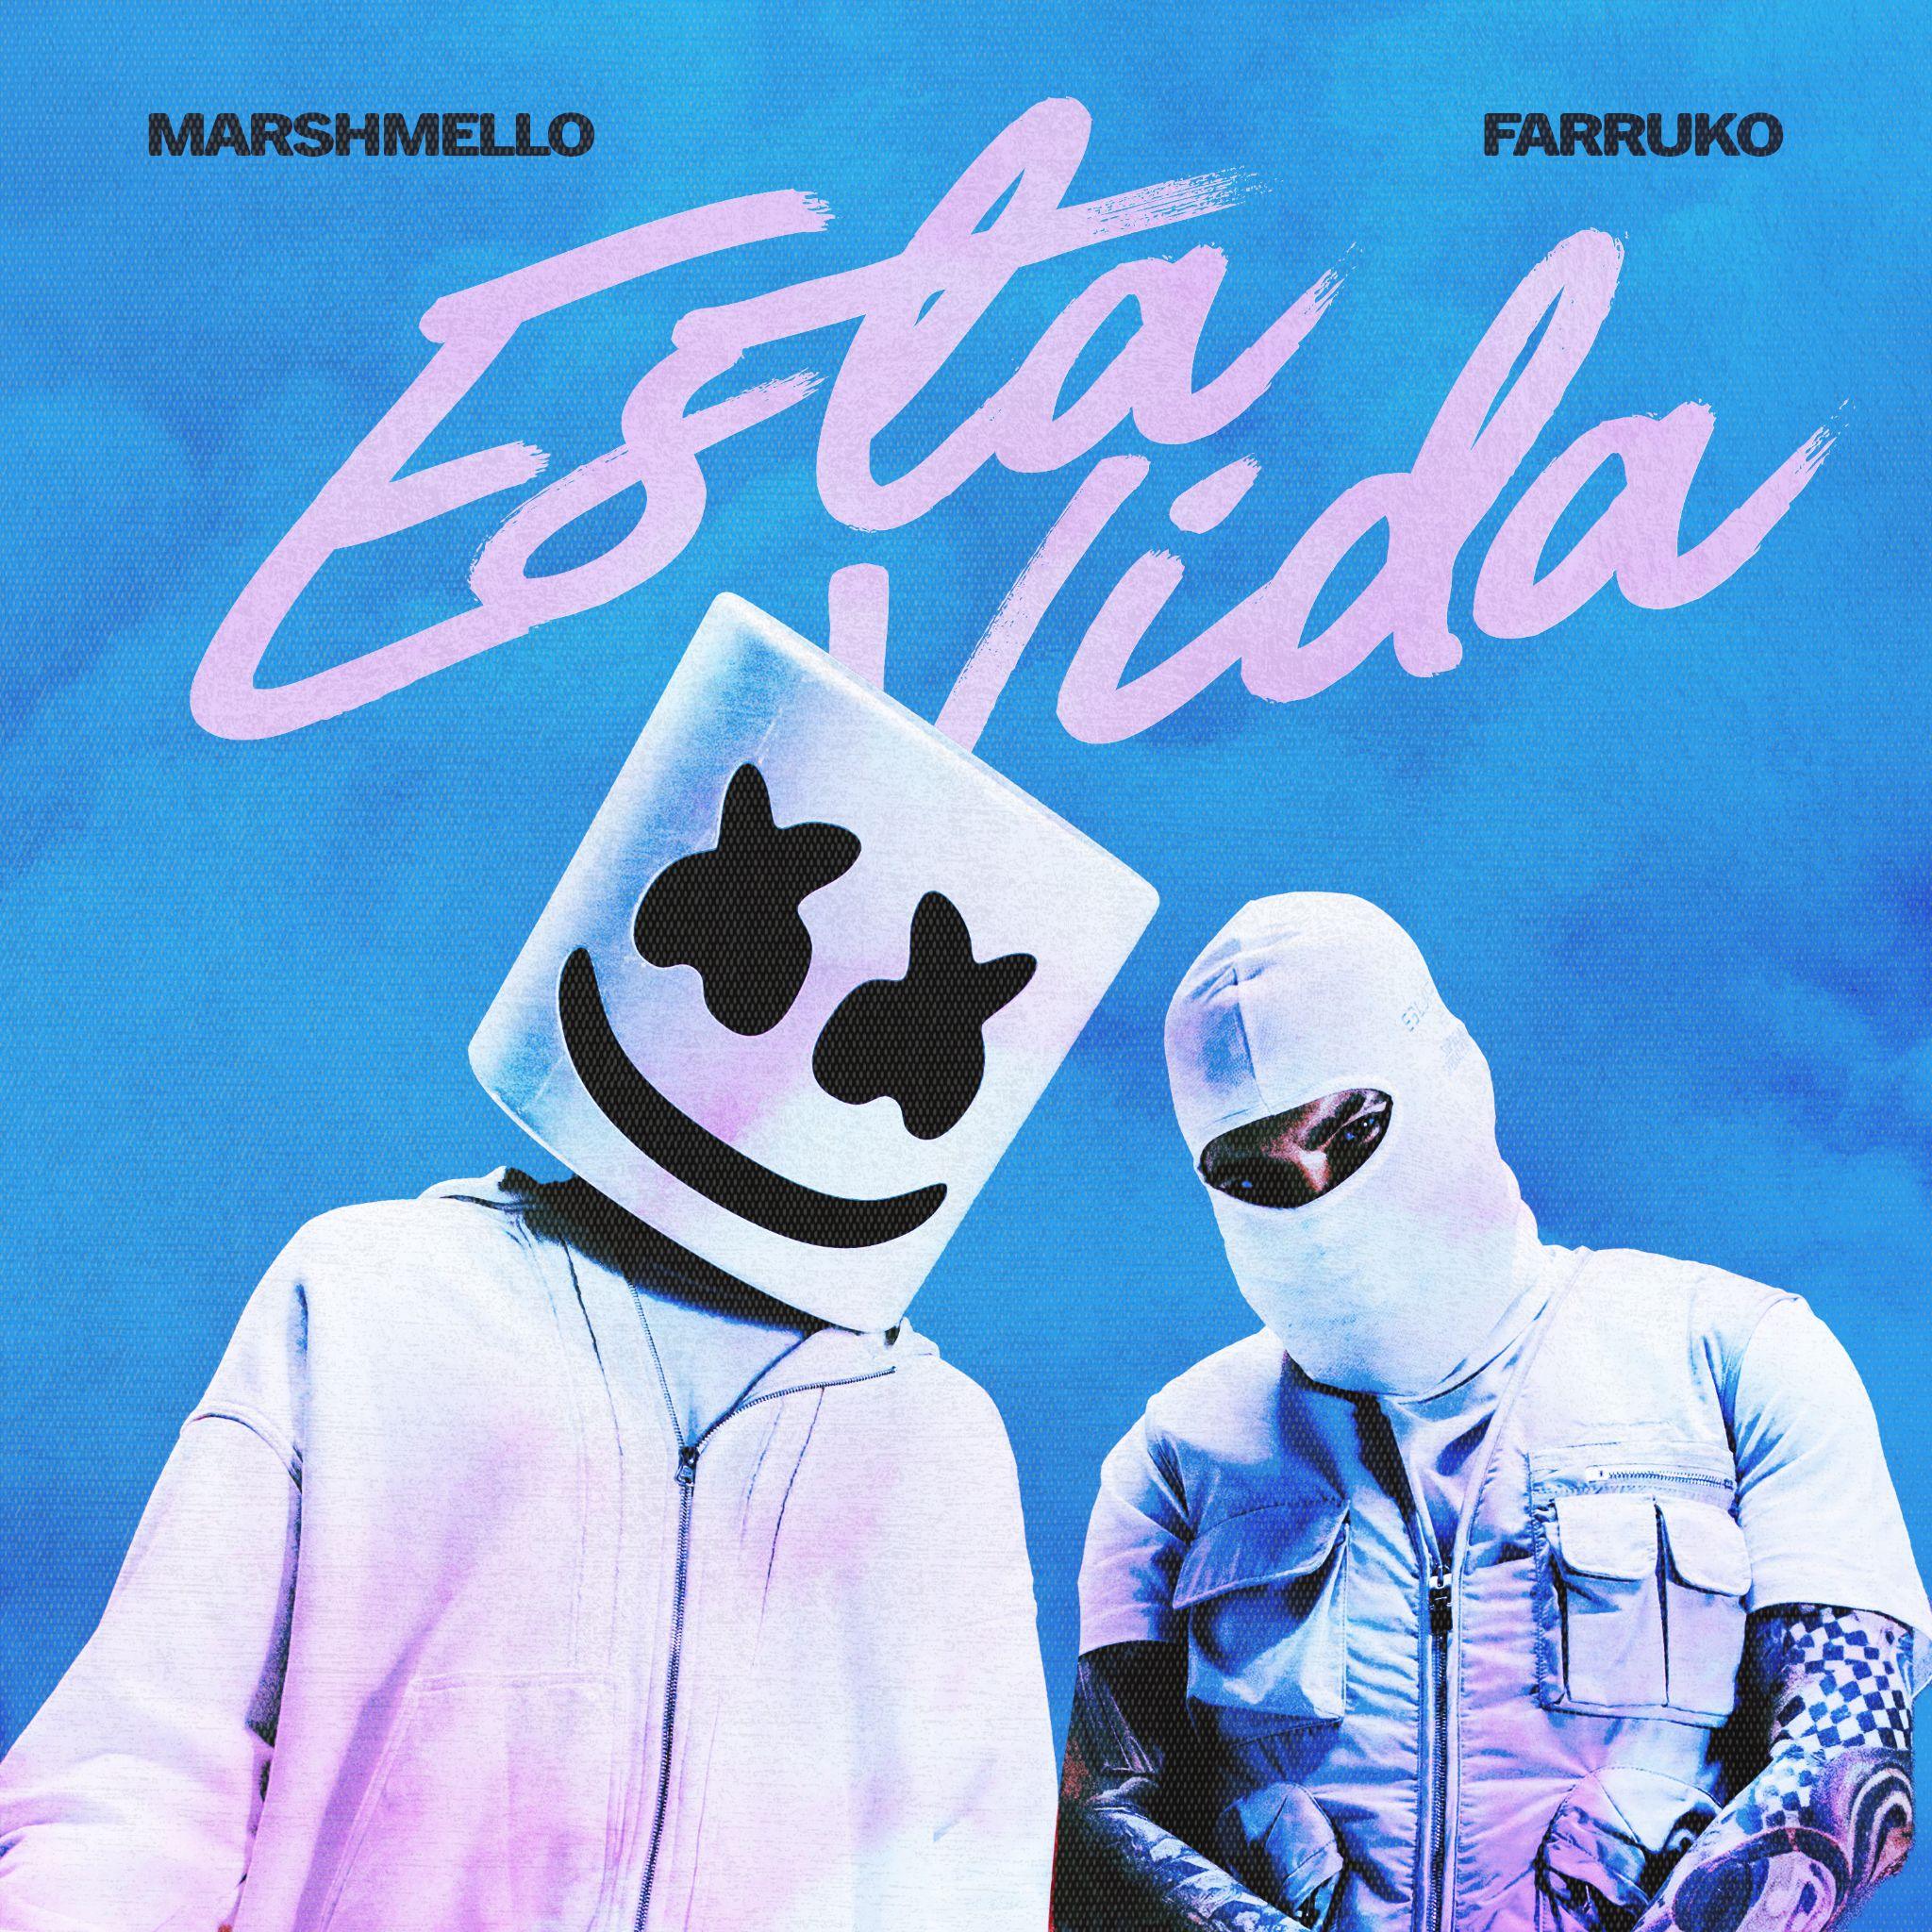 Marshmello teams up with Farruko on a  fresh single collab & new video release for “Esta Vida”